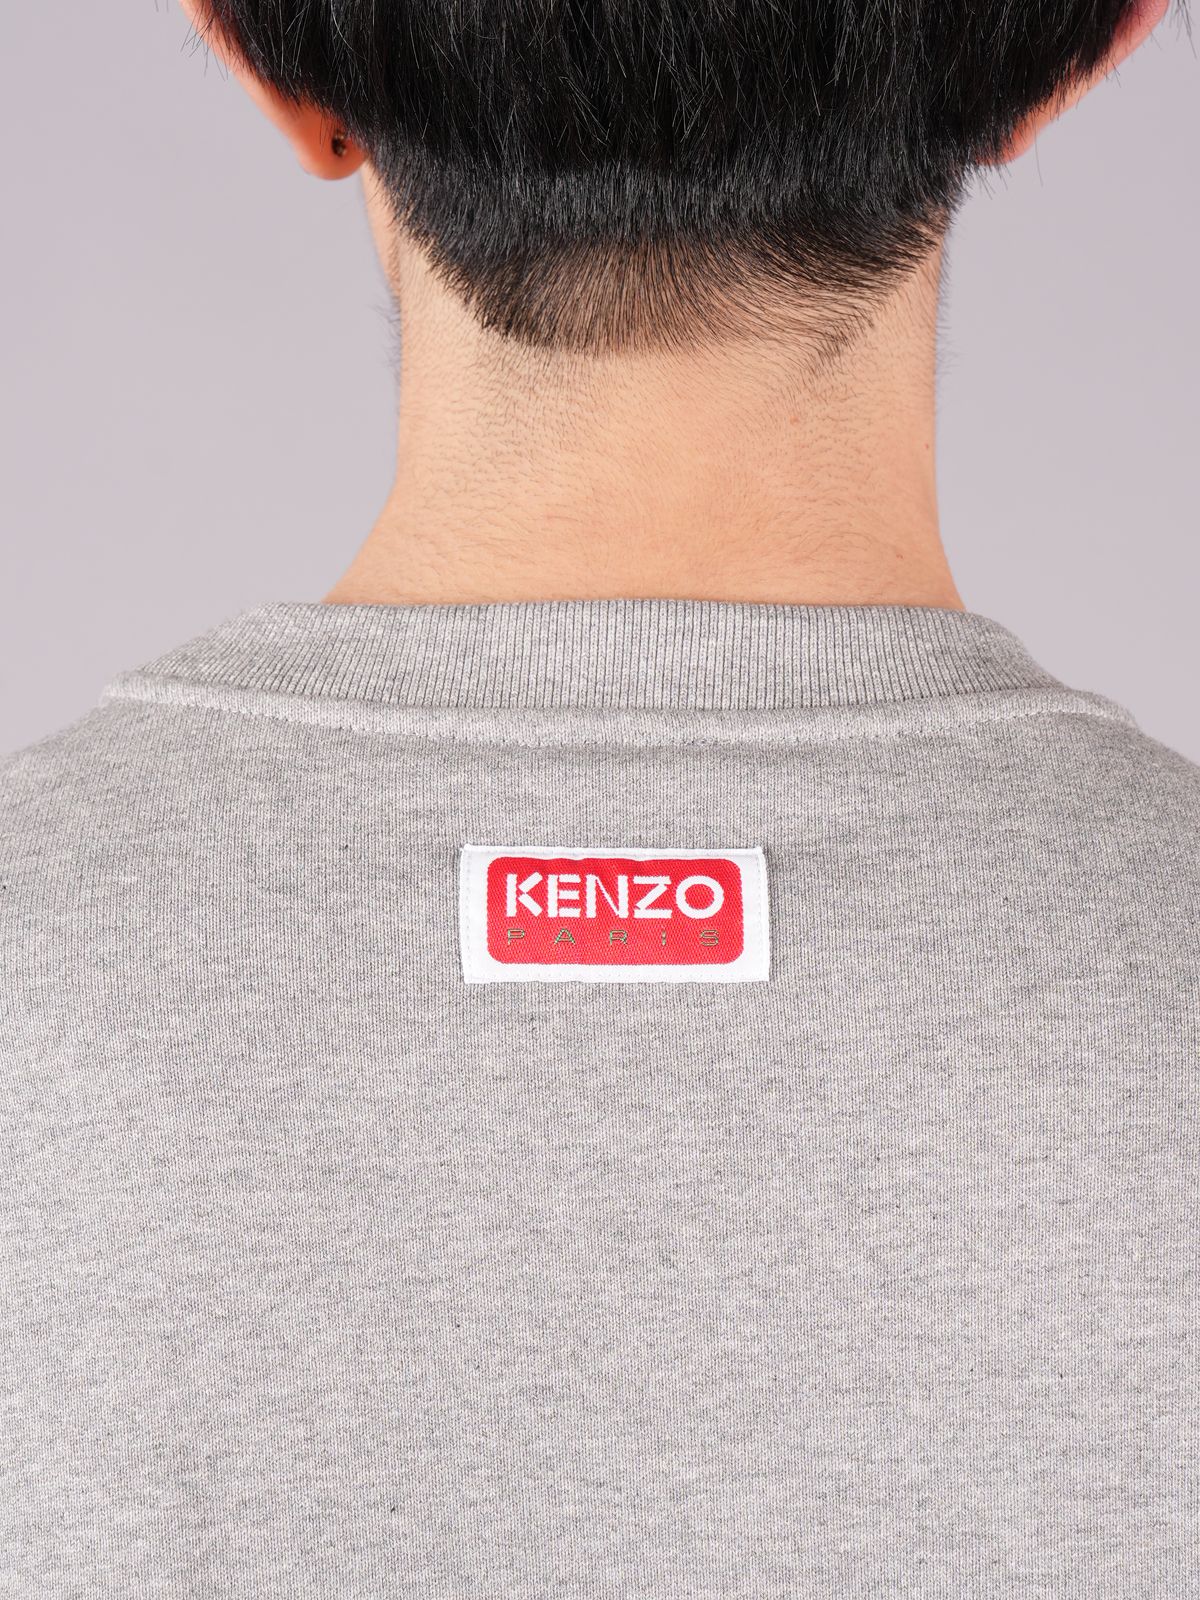 KENZO BOKE FLOWER スウェットシャツ - midnightsun-grp.com